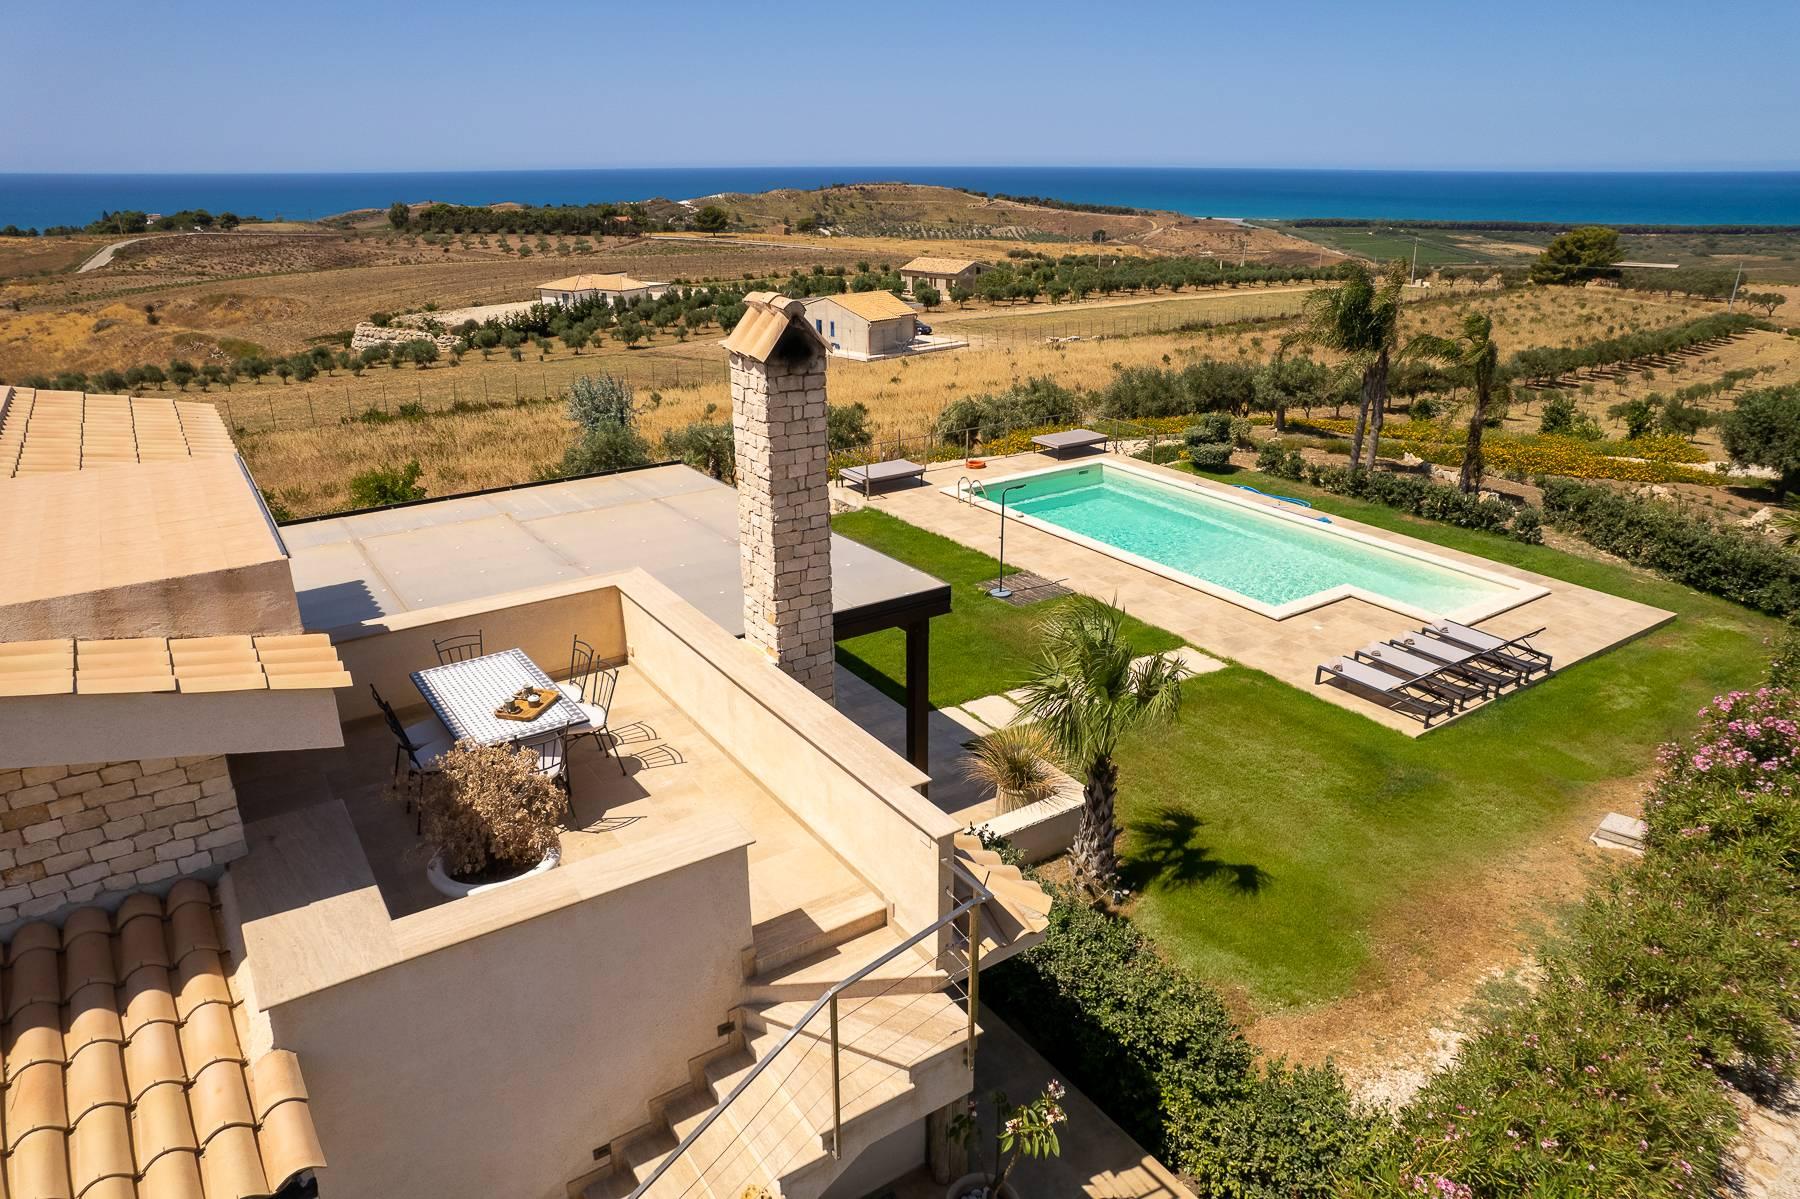 Exclusive villa with stunning views on the Mediterranean sea - 6